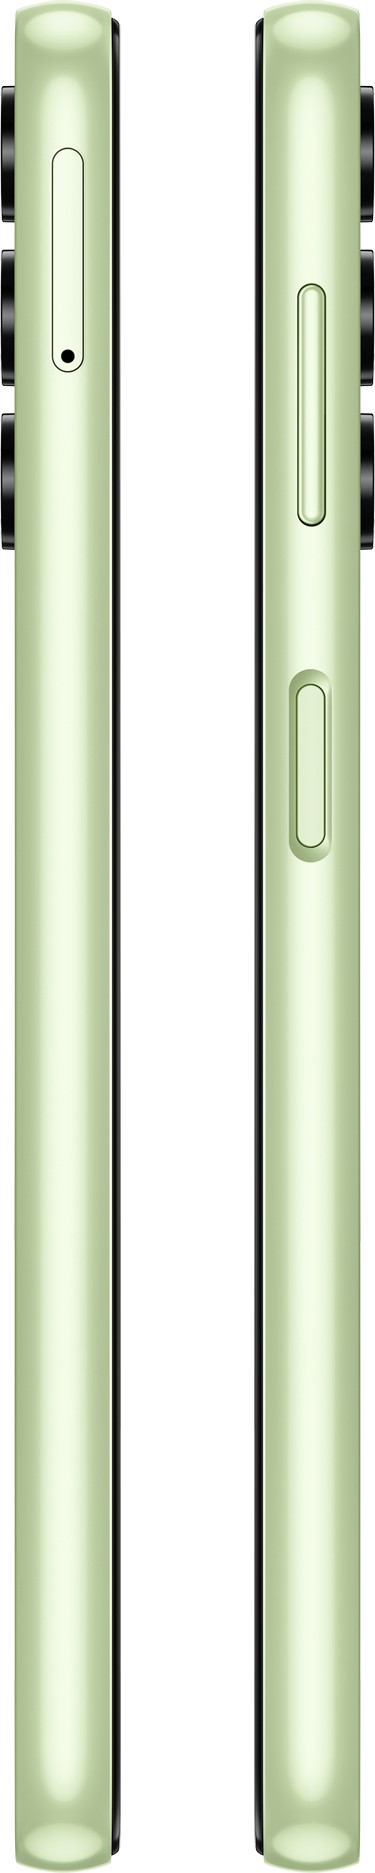 SAMSUNG Smartphone Galaxy A14 5G 64Go Vert  - GALAXY-A14-5G-64-VER